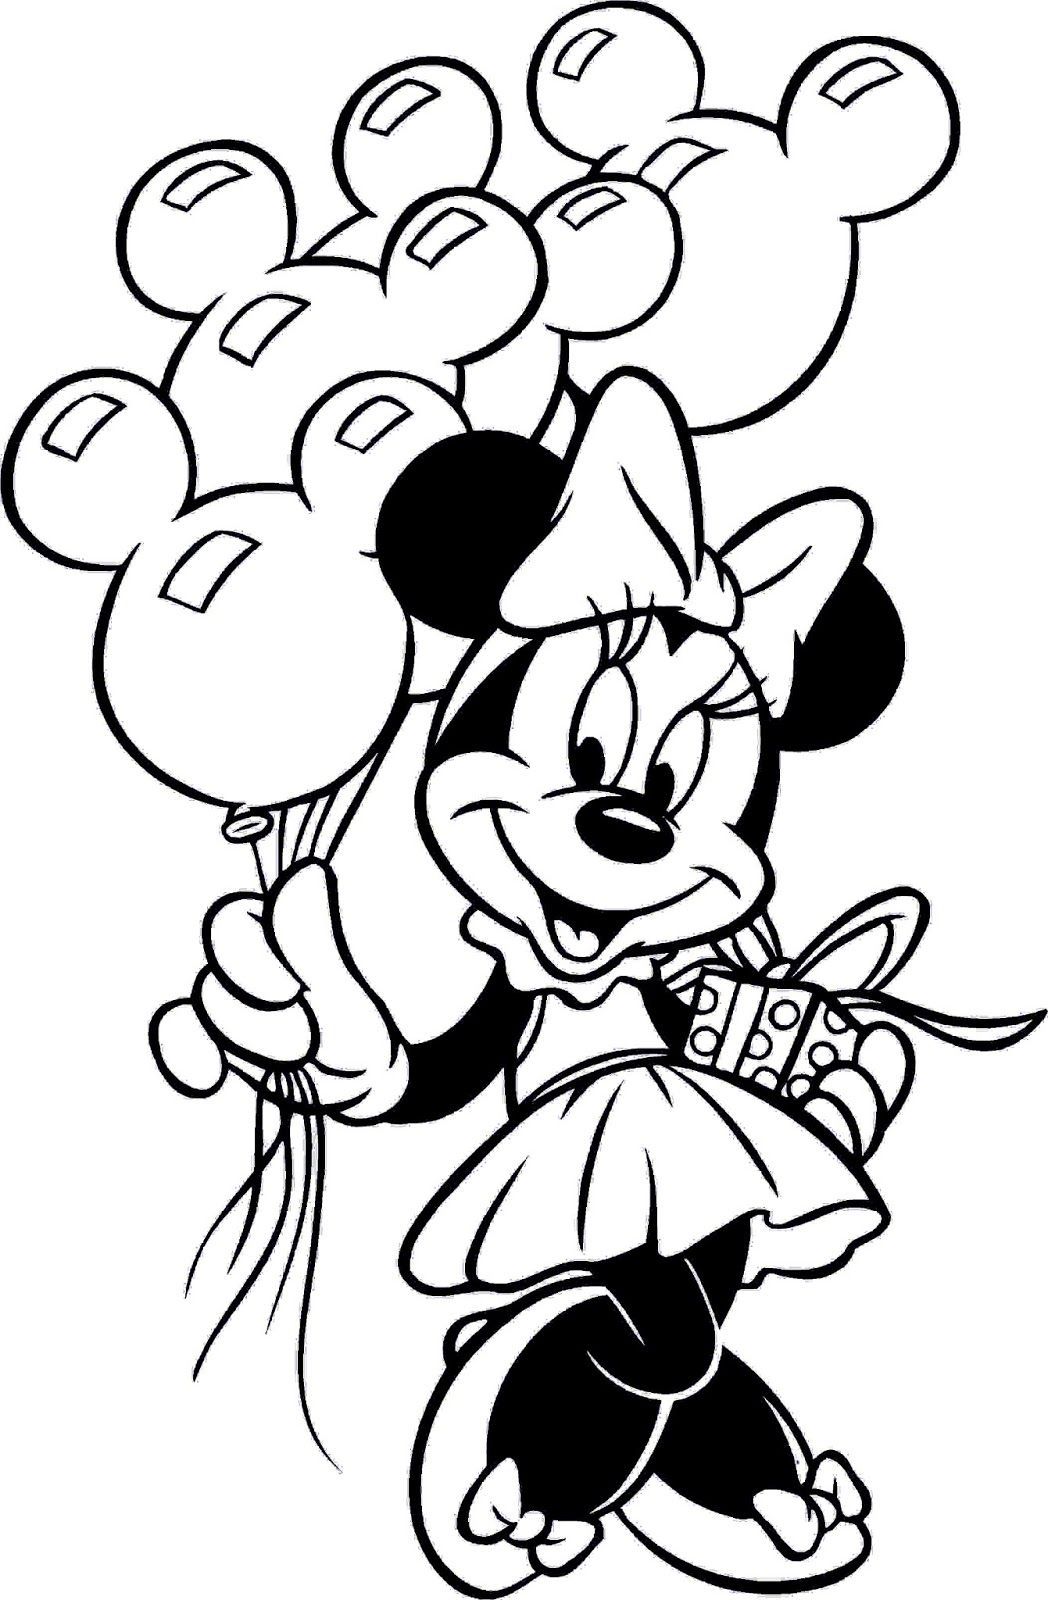 Minnie Mouse met ballonnen van Minnie Mouse